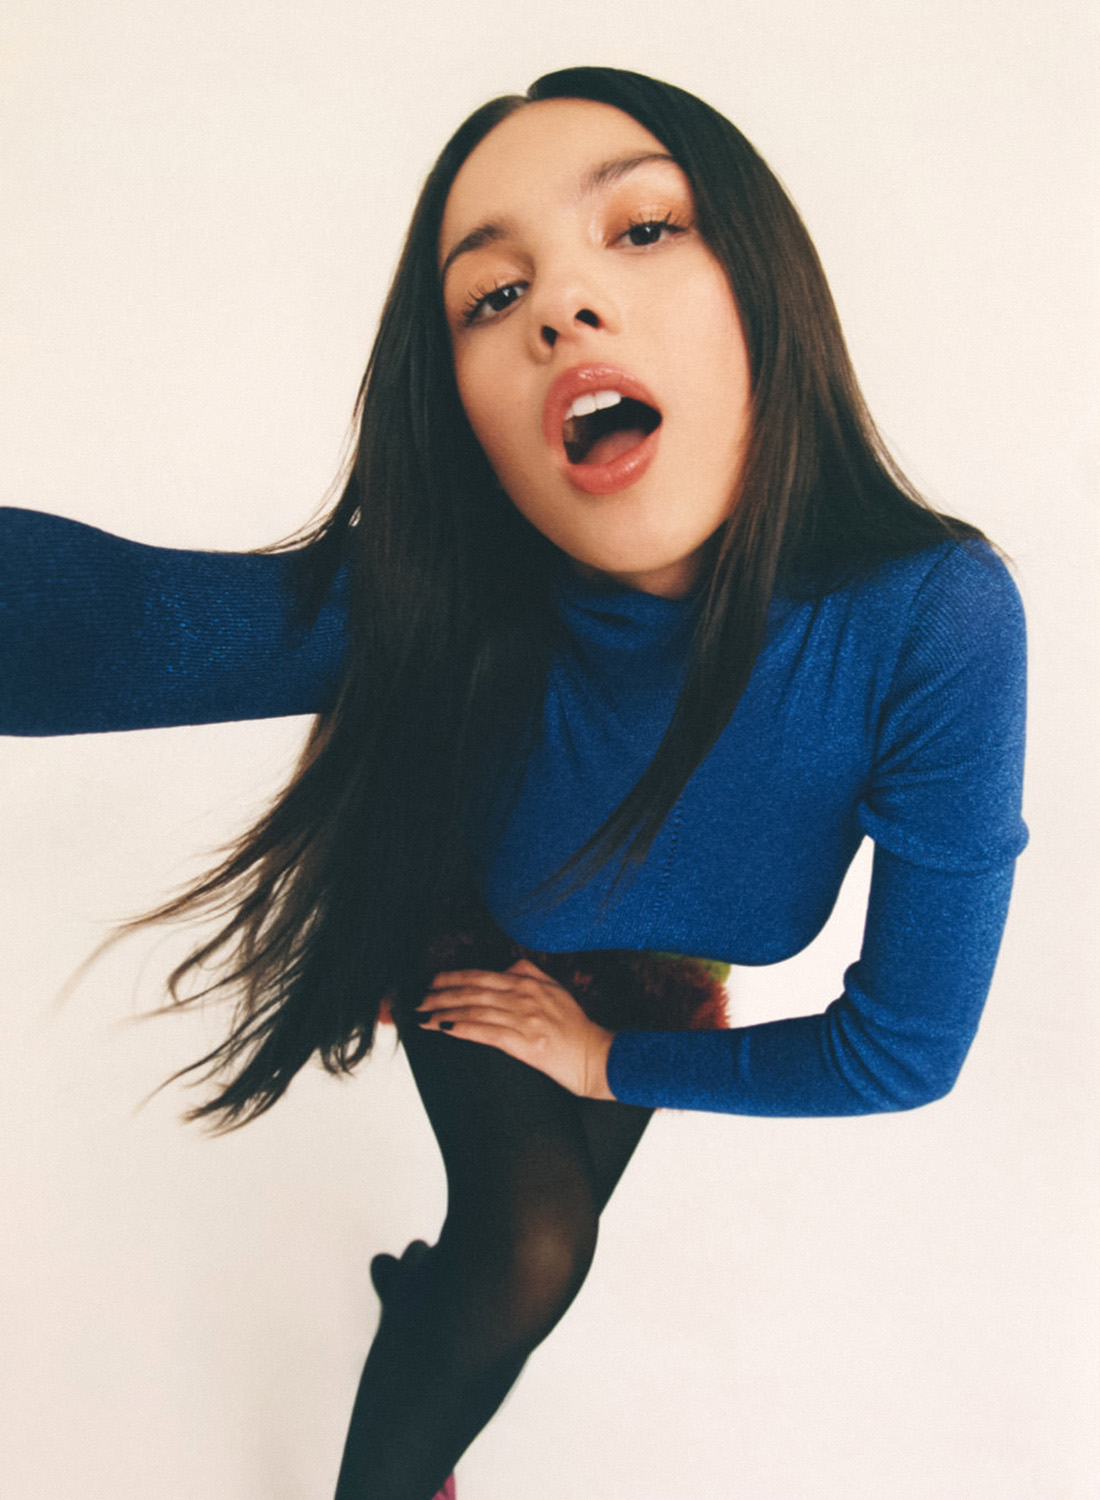 Olivia Rodrigo covers Vogue Singapore October 2021 by Peter Ash Lee